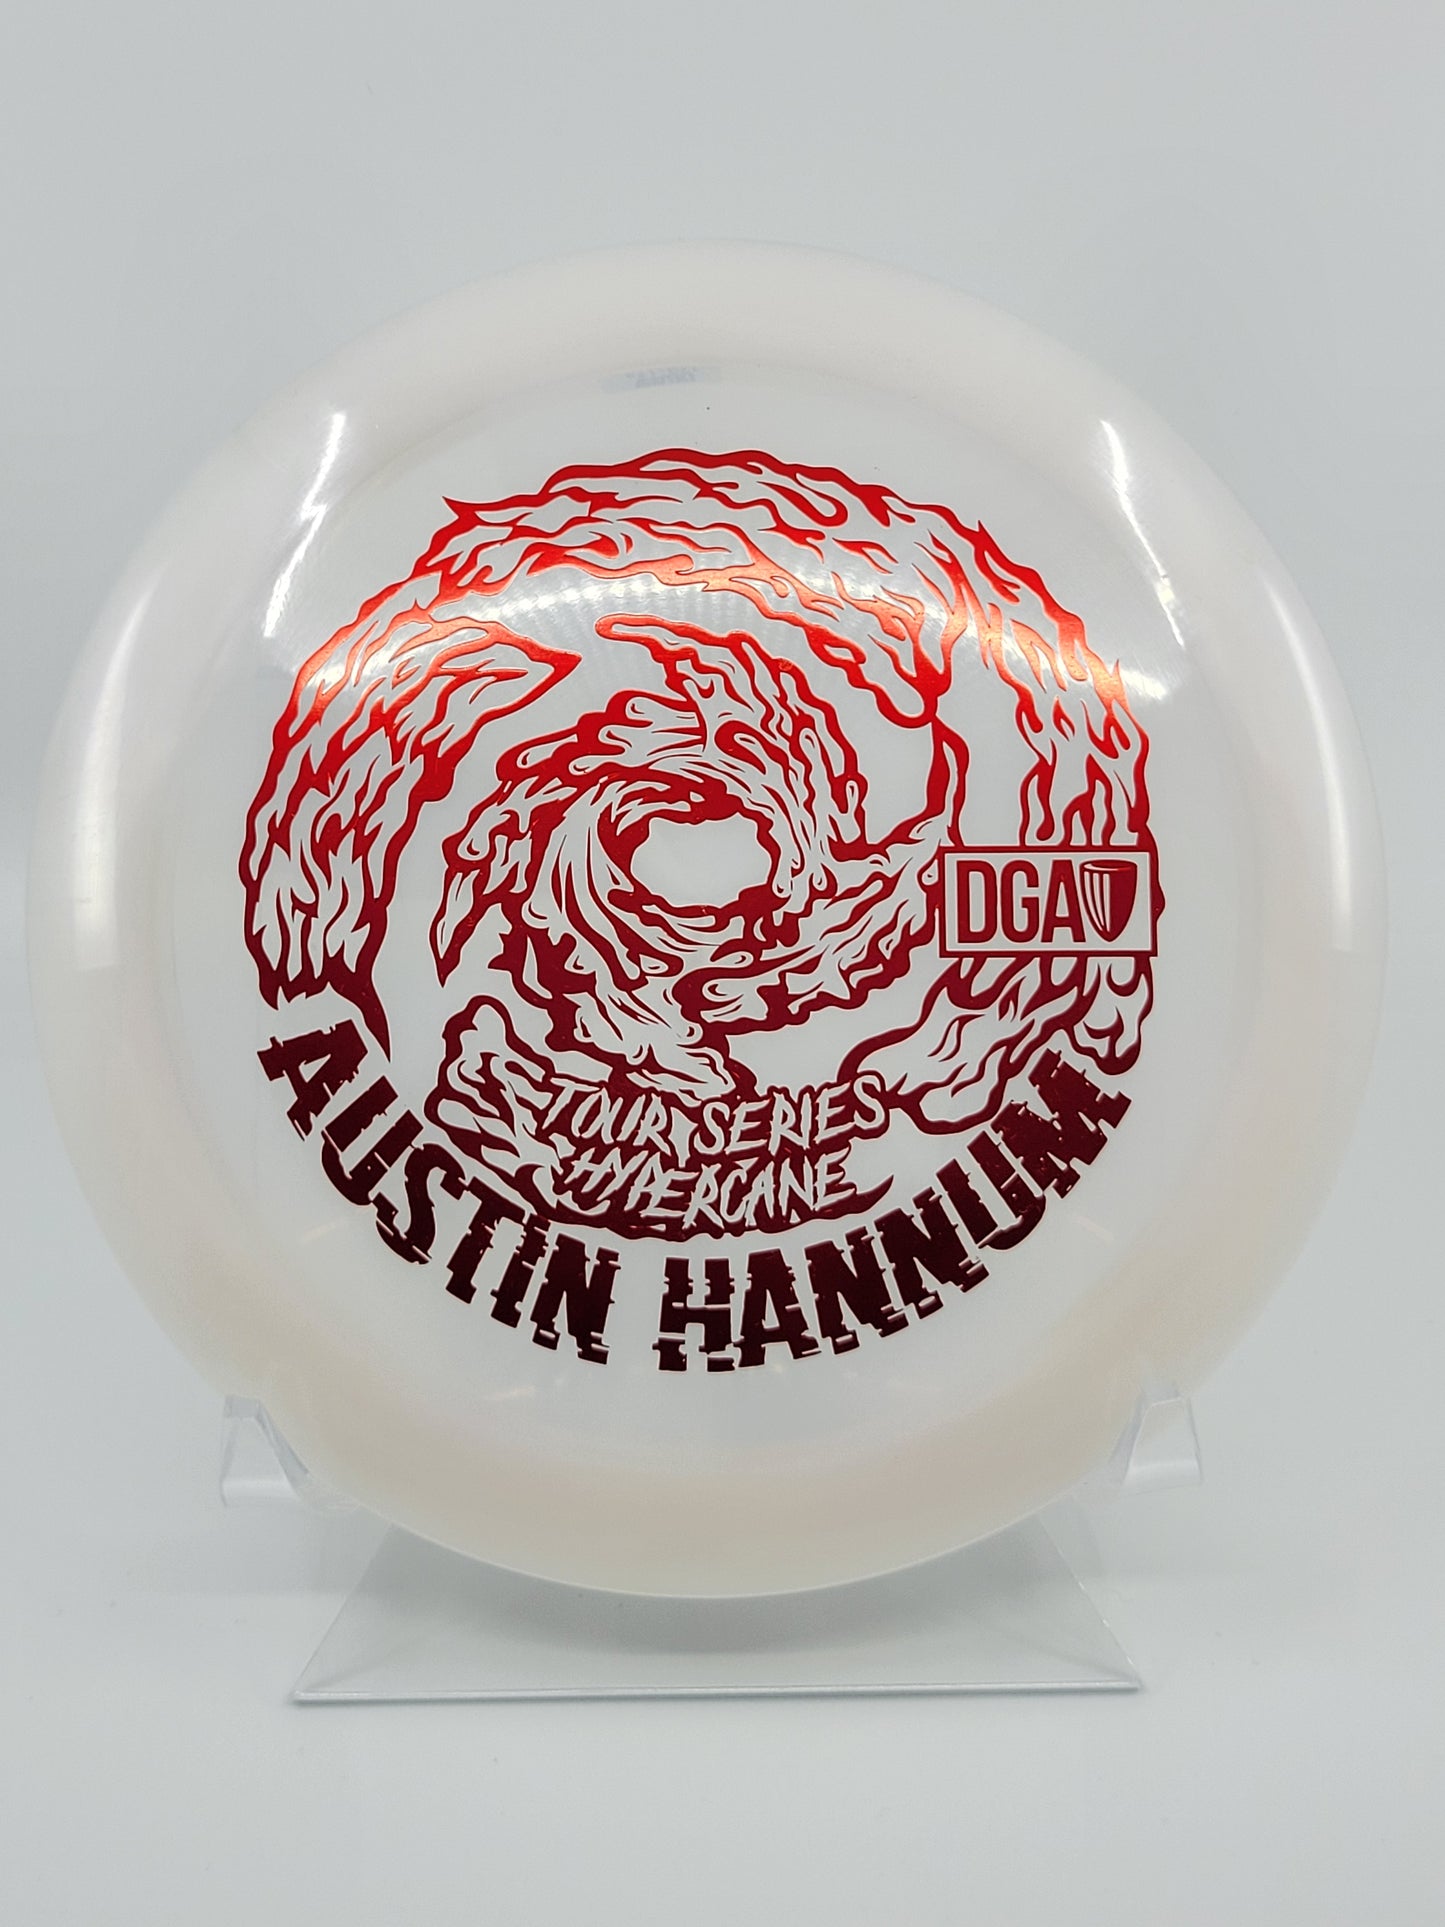 DGA 2023 Austin Hannum Tour Series Swirl Hypercane